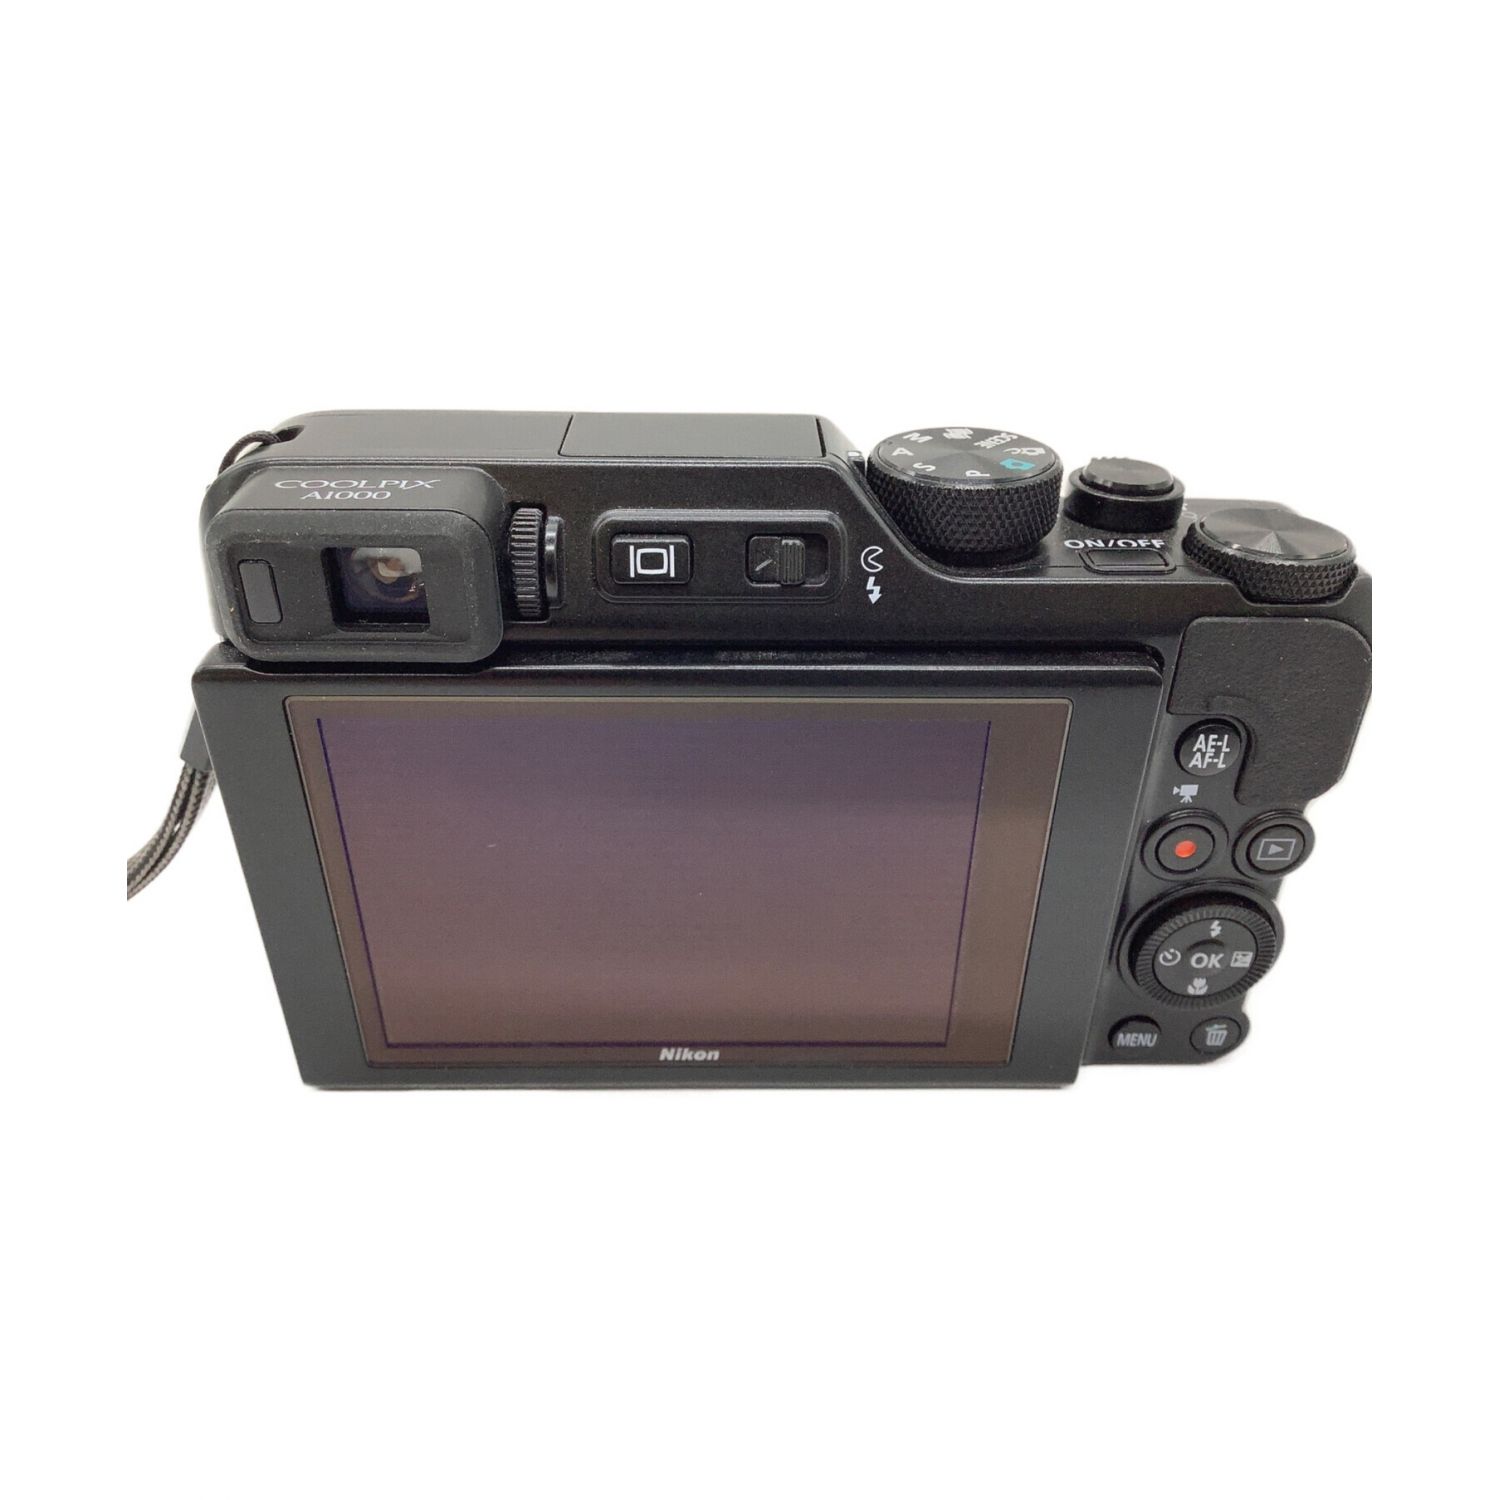 Nikon (ニコン) デジタルカメラ A1000 1604万画素 1/2.3型CMOS 専用 